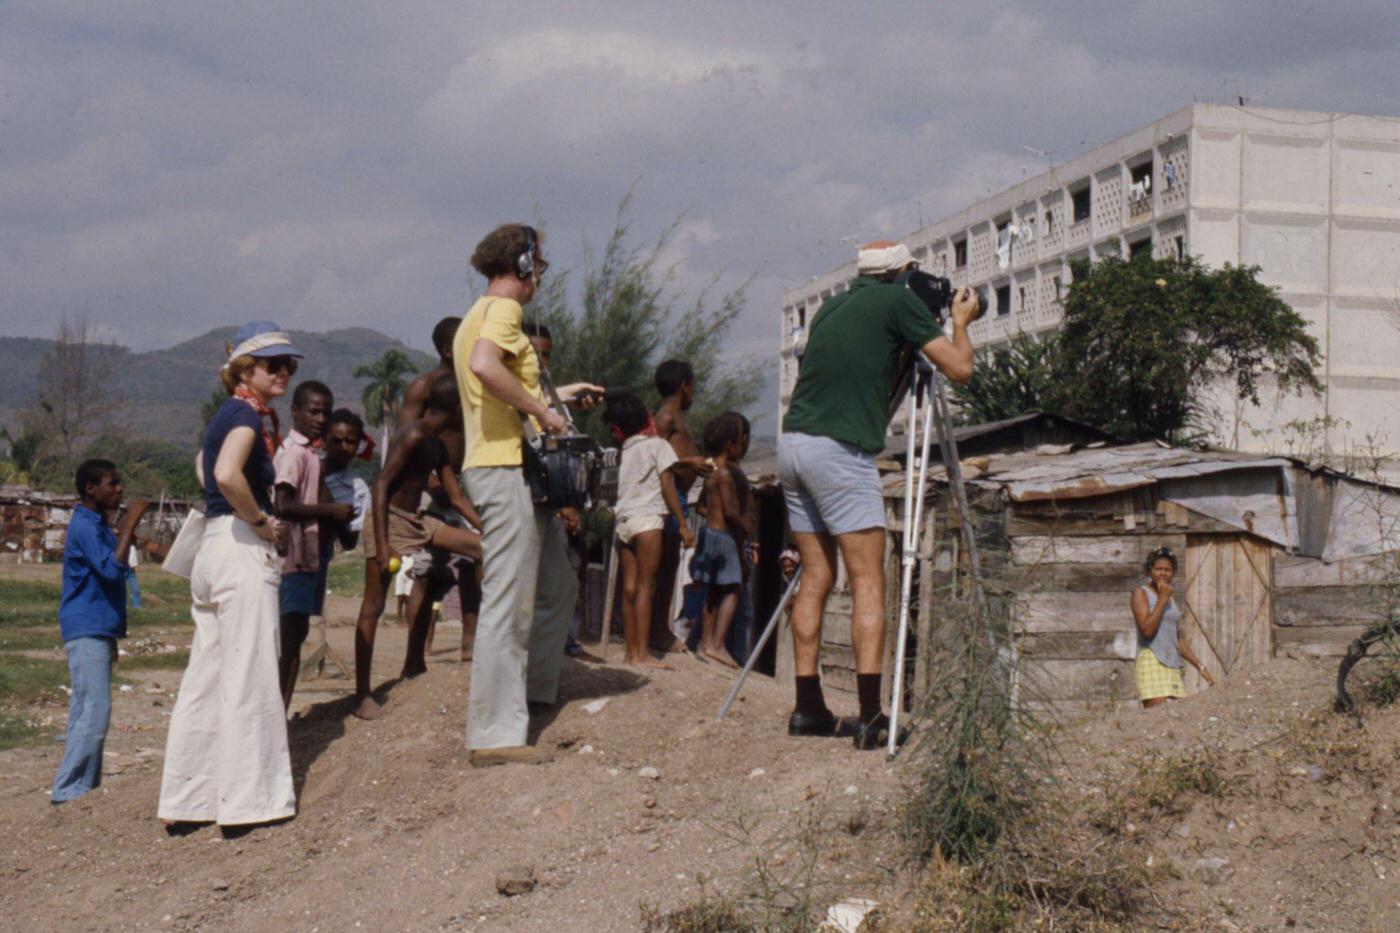 Camera crew at José Martí housing project, slums in the foreground, featured in 'Closeup: Cuba - The Castro Generation', Havana, Cuba, 1977.